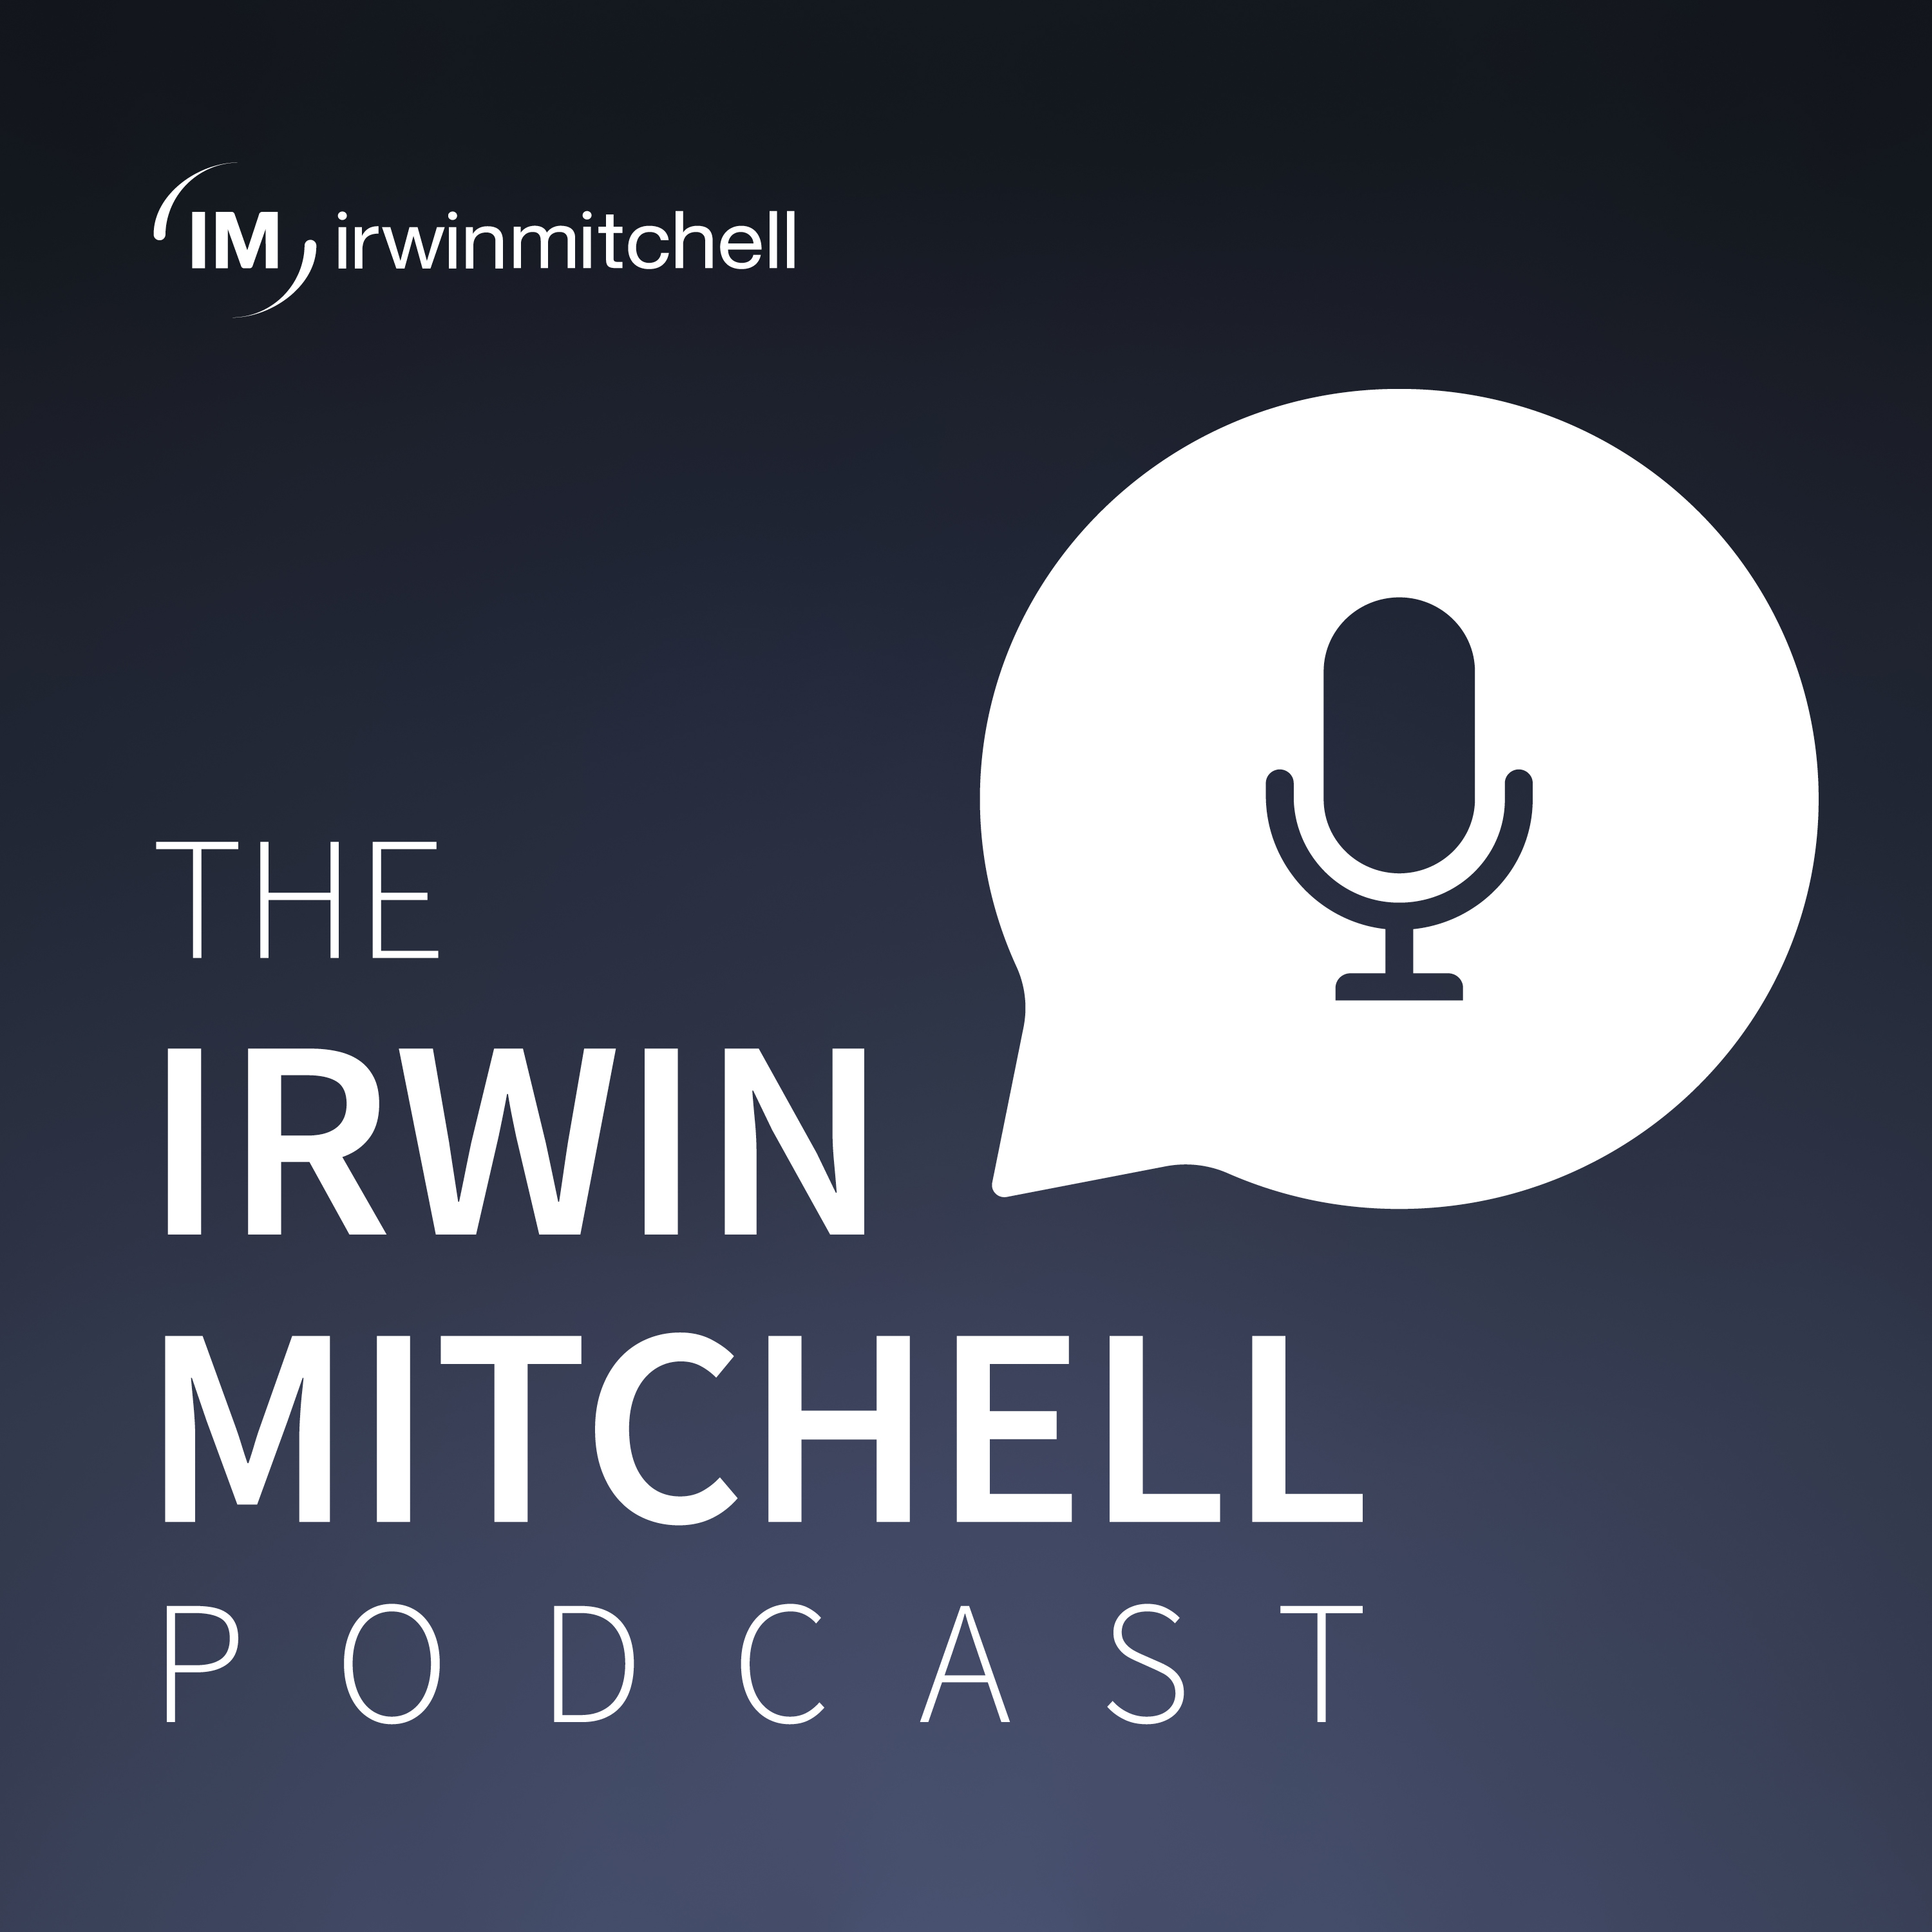 The Irwin Mitchell podcast logo